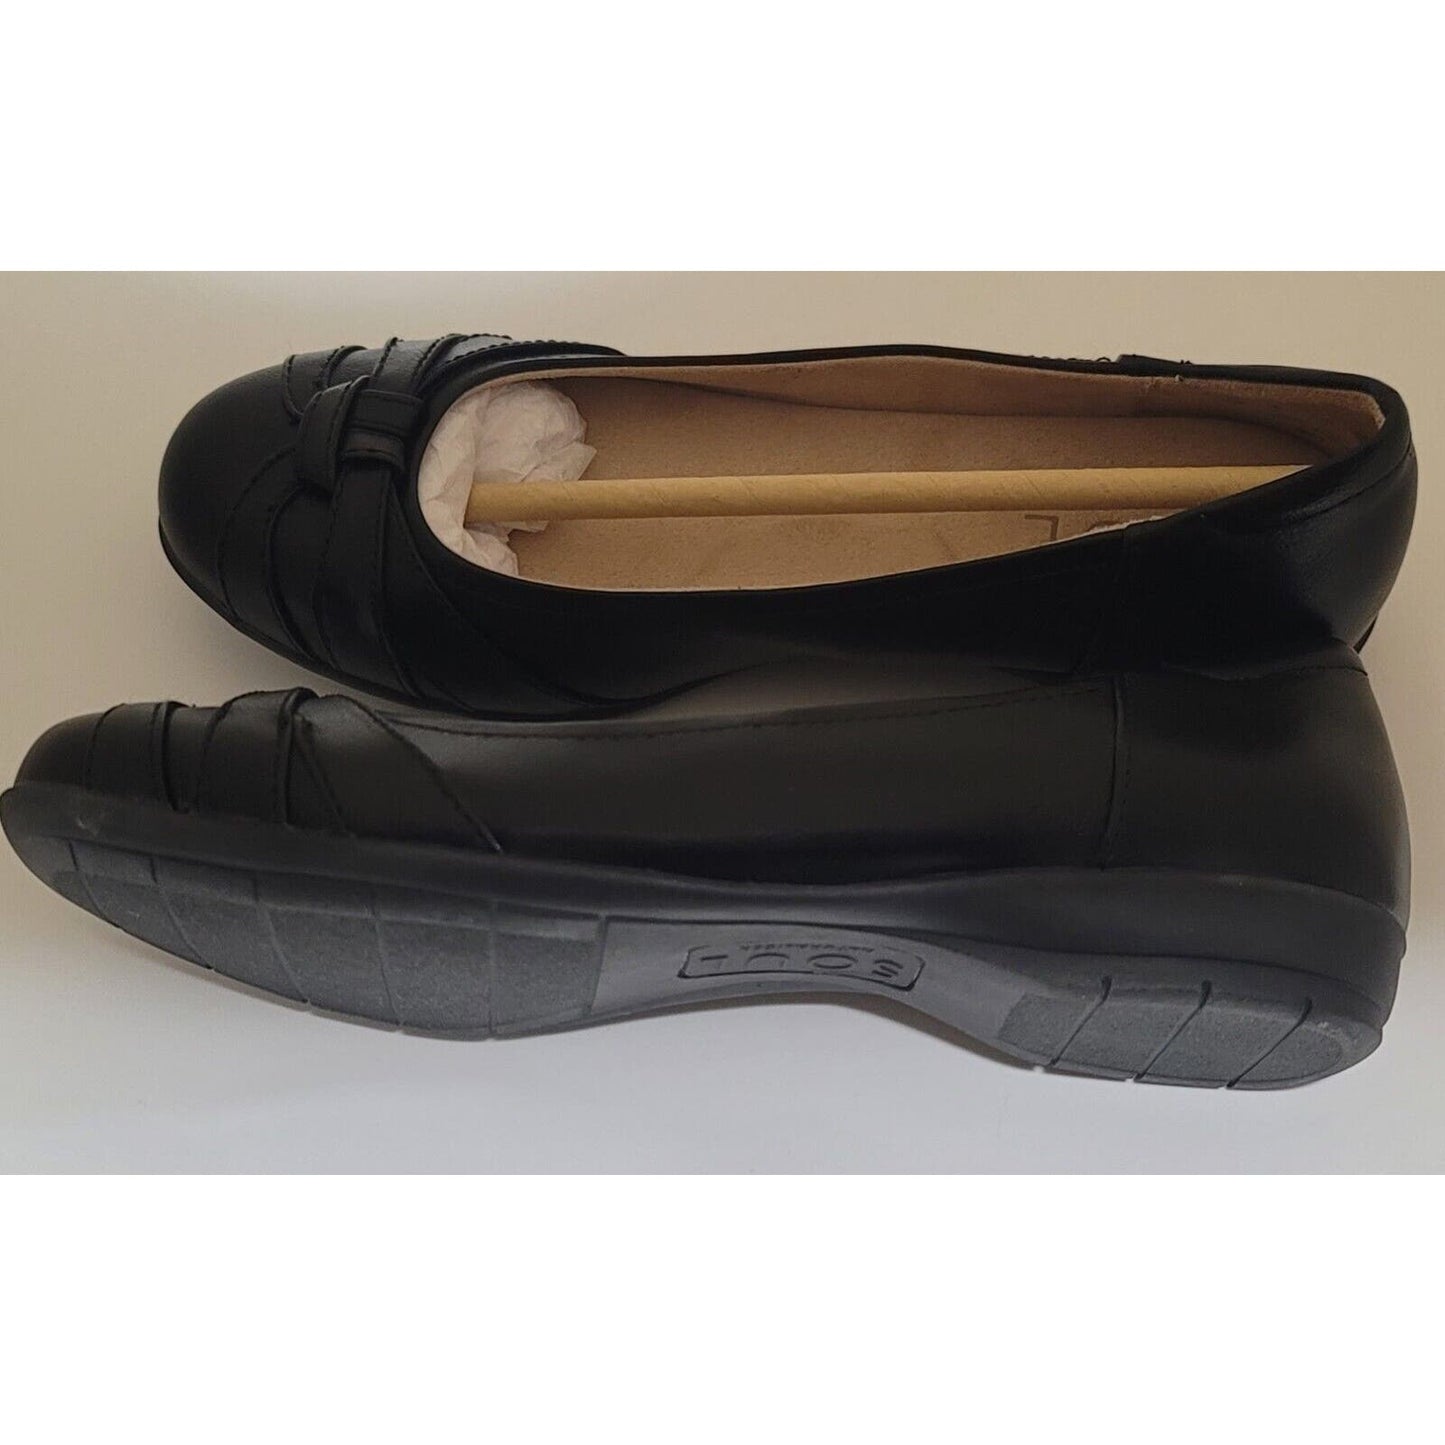 SOUL Naturalizer Women's Gift Ballet Flat Comfort 6M Shoes